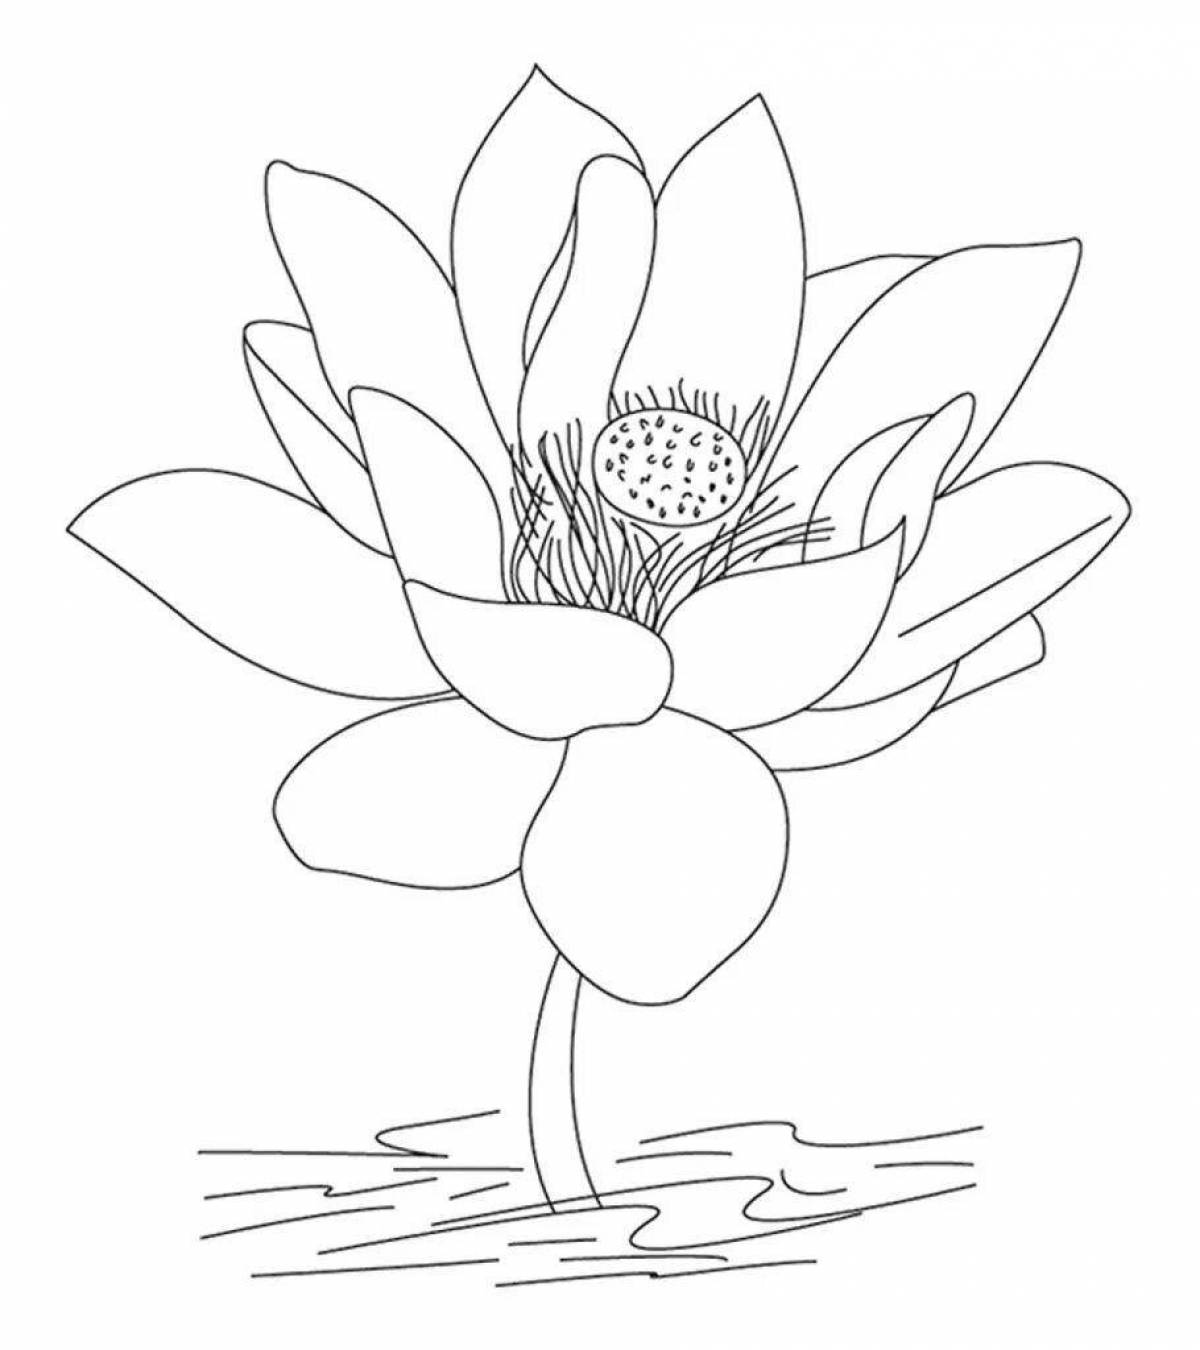 Jolly lotus coloring book for kids